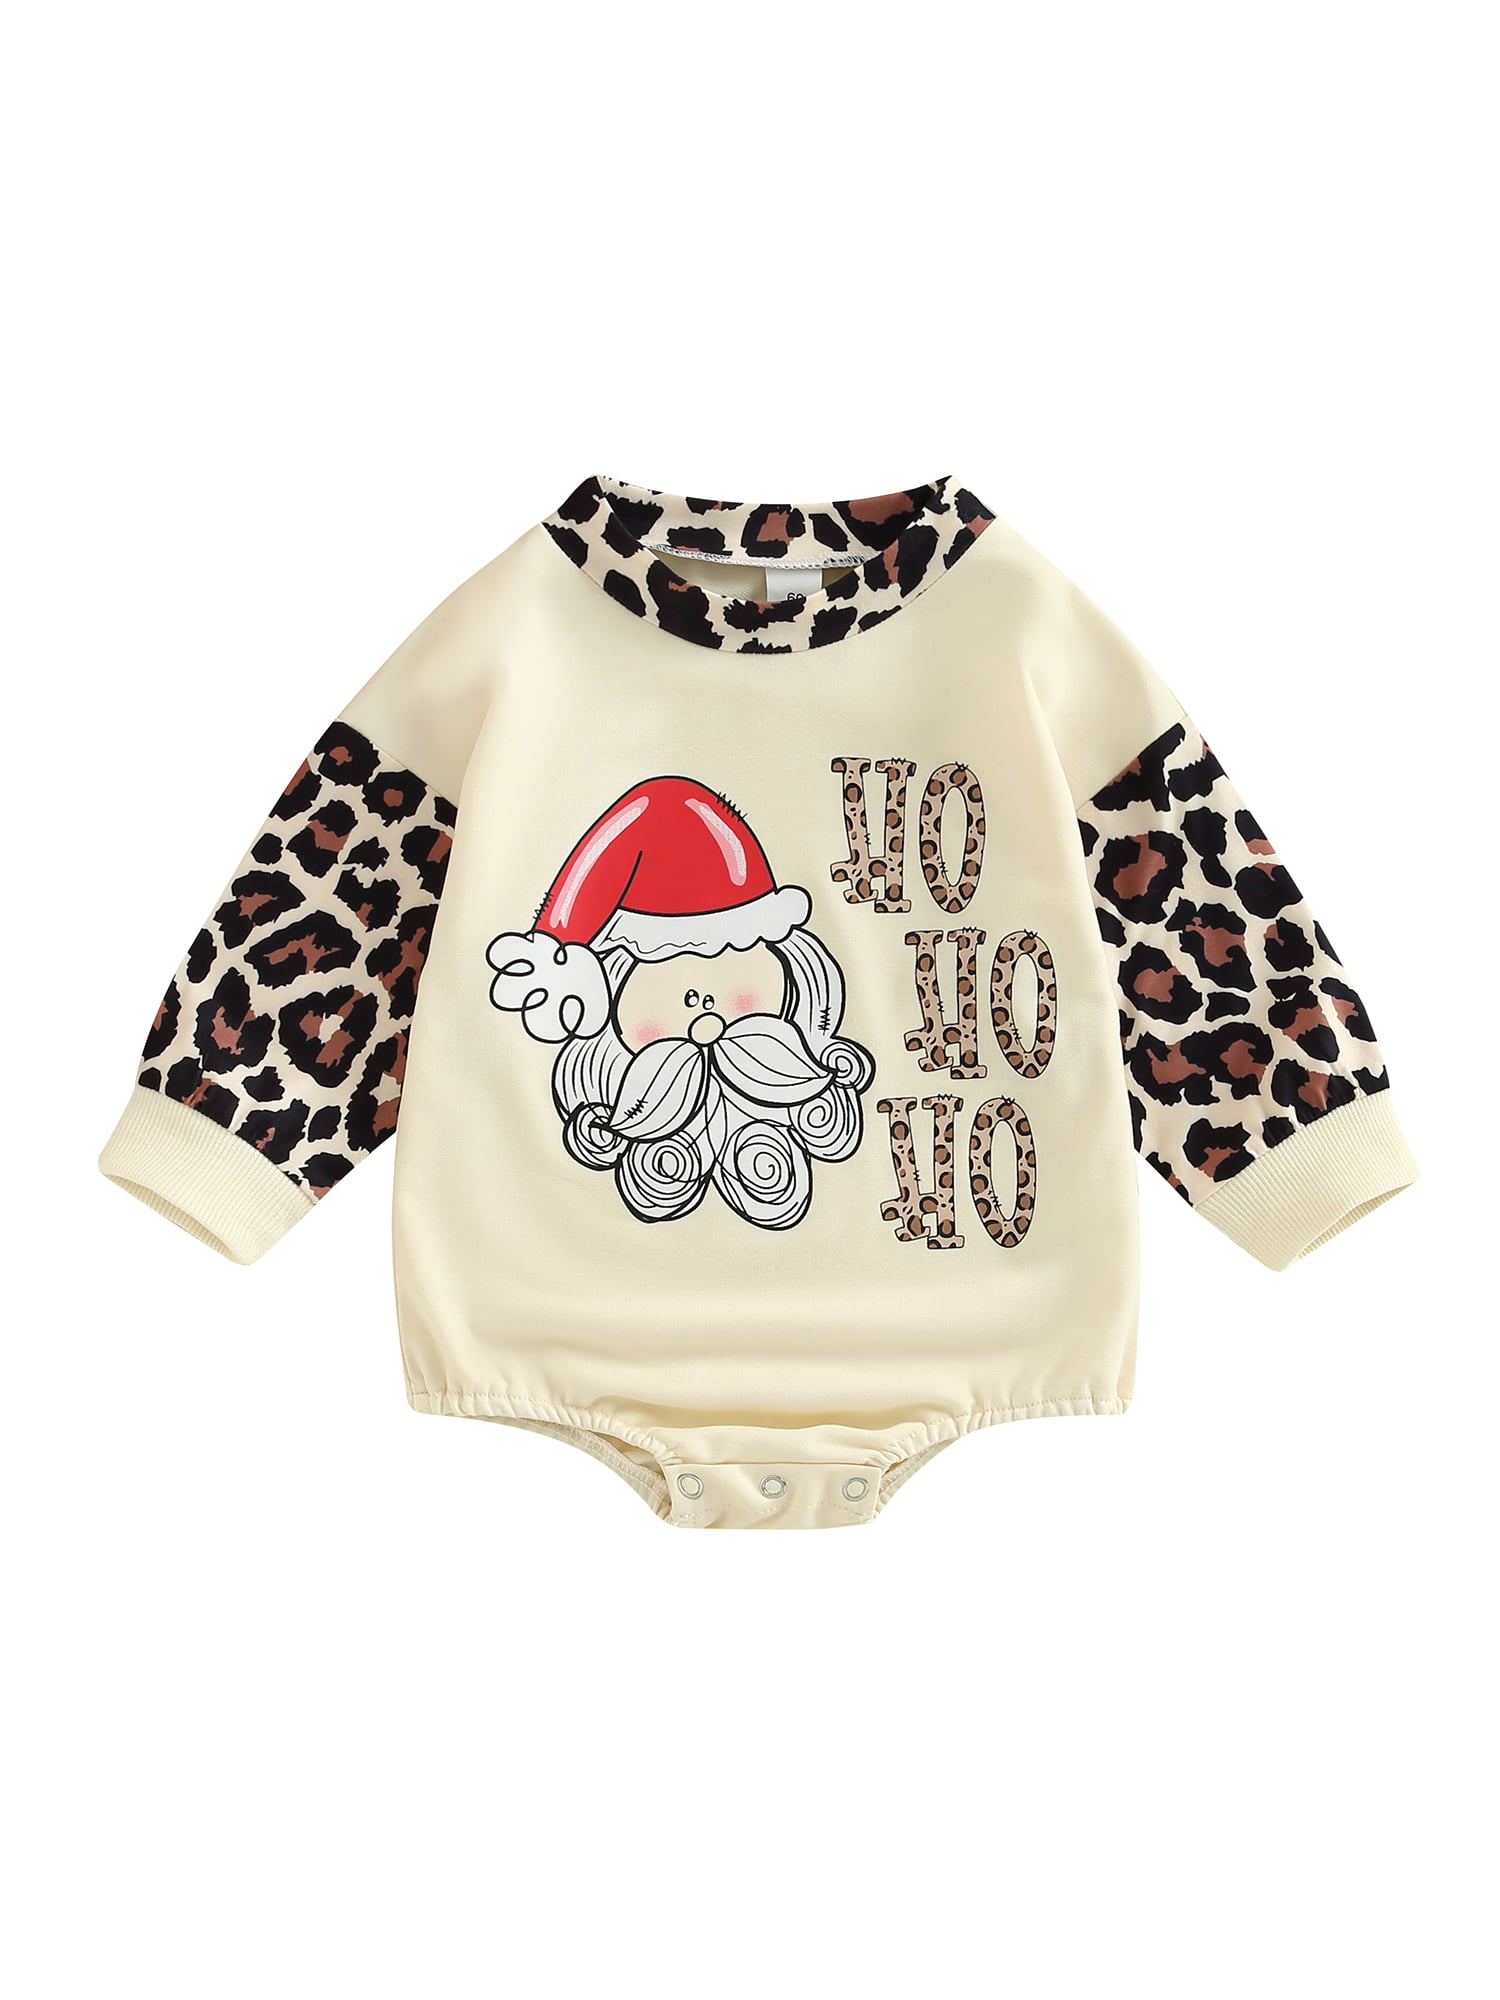 Qiylii Baby Girl Boys Christmas Romper, Long Sleeve Round Neck Letters Santa / Hat Print Loose Short Jumpsuit,0-18M